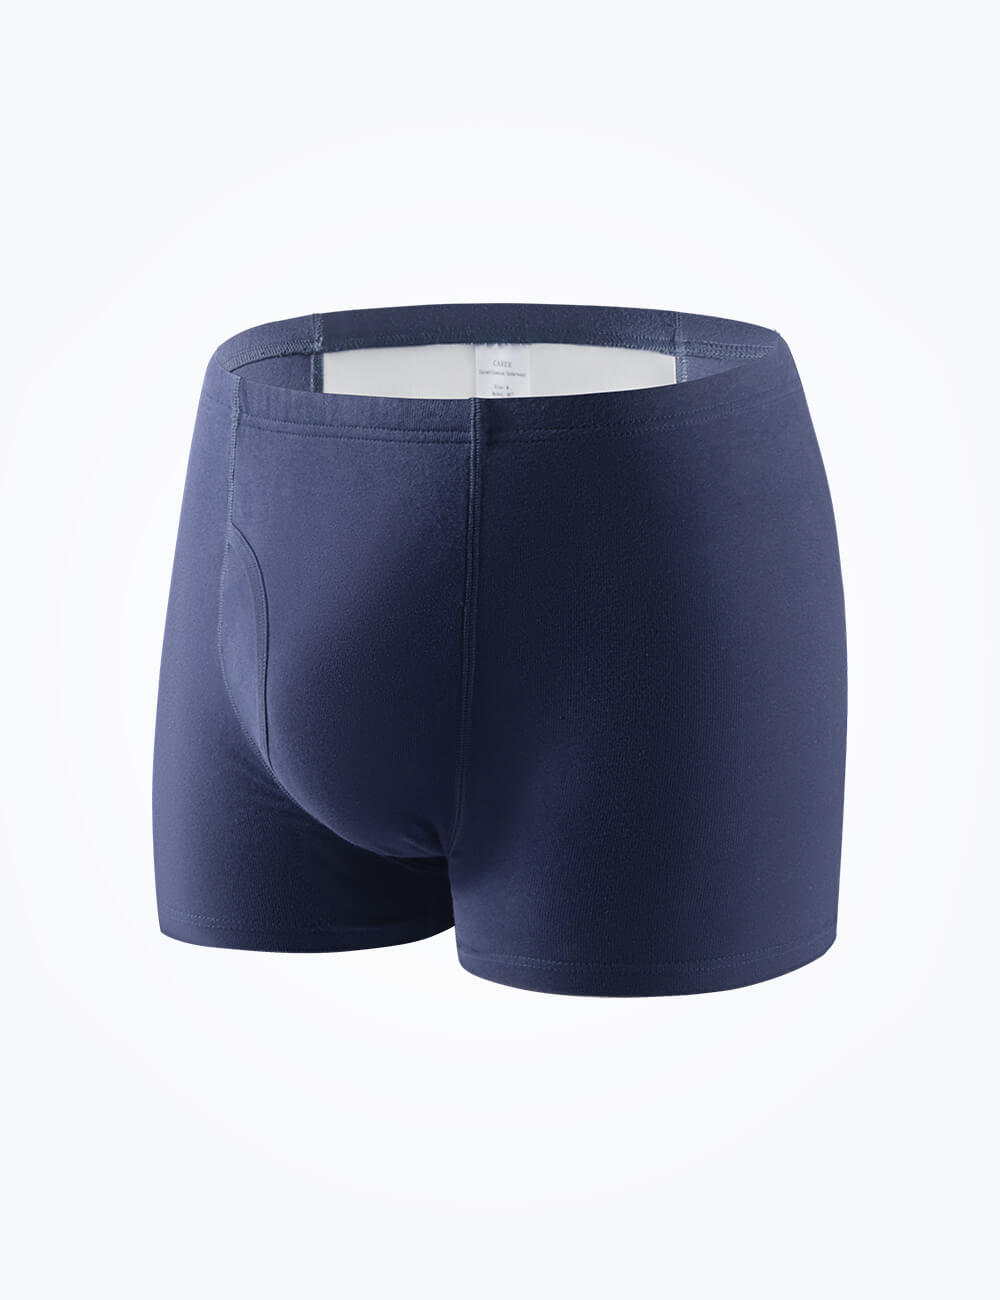  Incontinence Underwear for Men Carer 2-Pack Men's